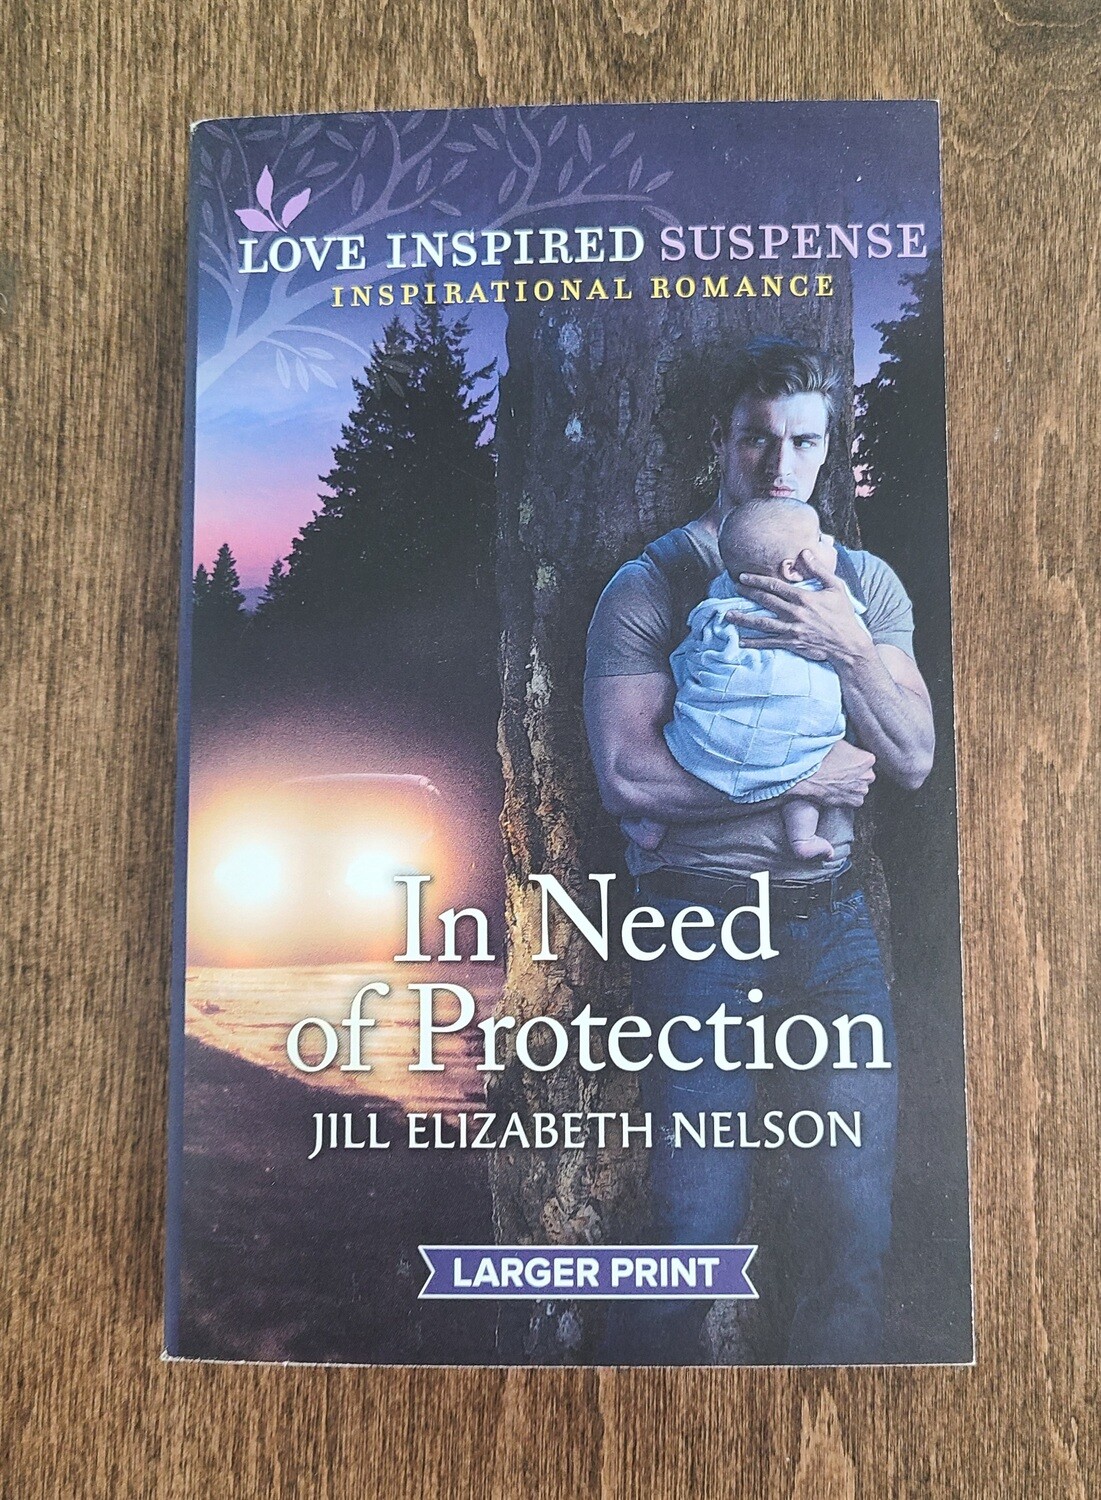 In Need of Protection by Jill Elizabeth Nelson